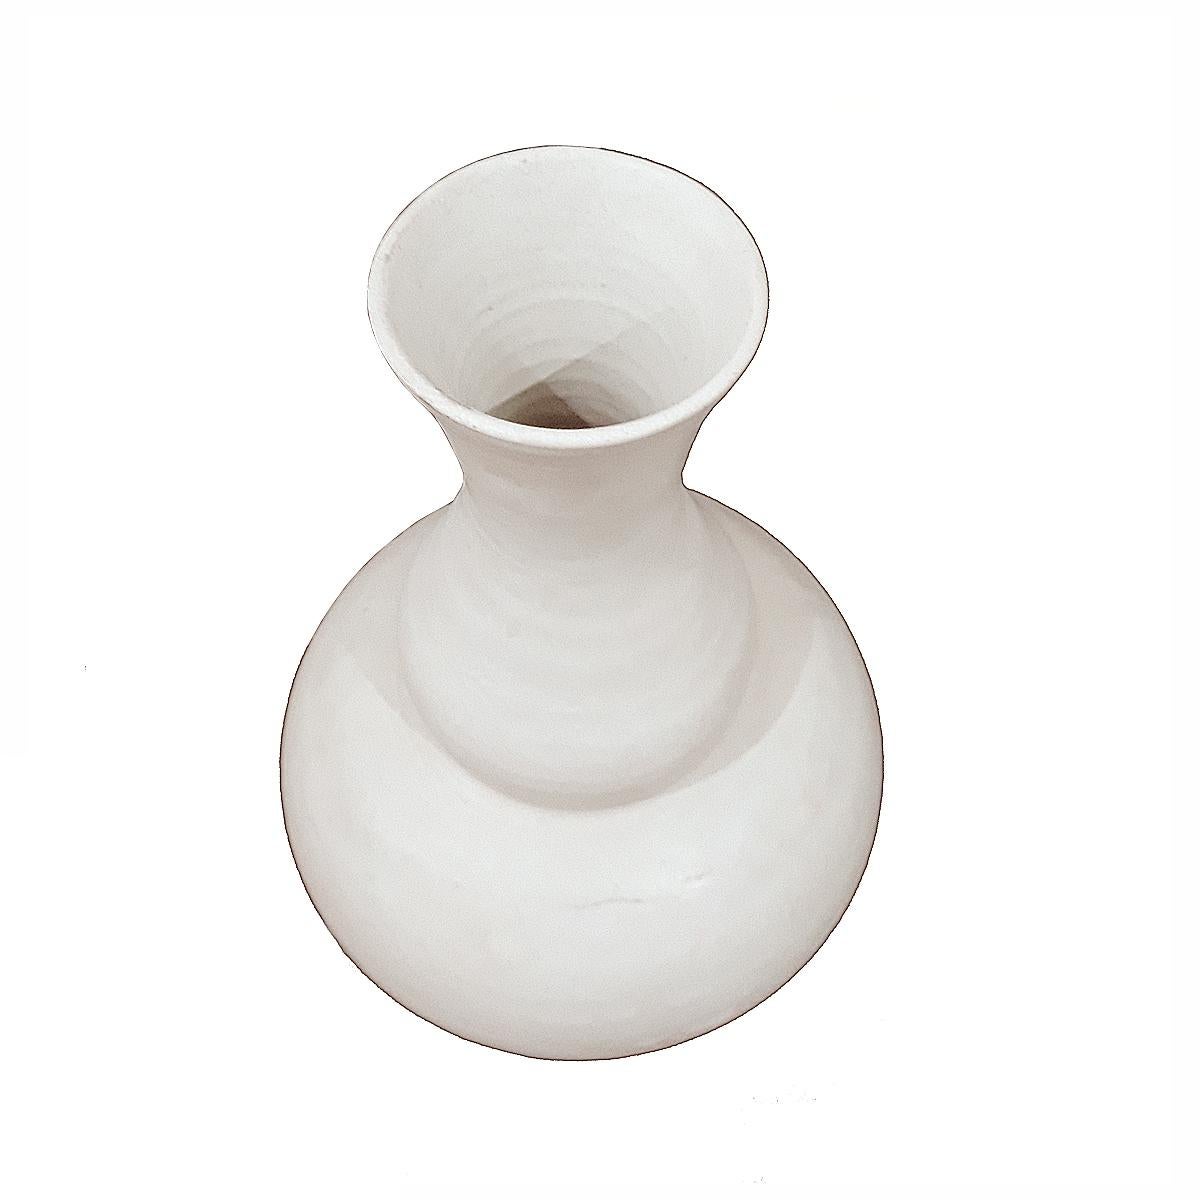 A white ceramic vase from Thailand, circa 1920. Matte white finish, tapered neck.